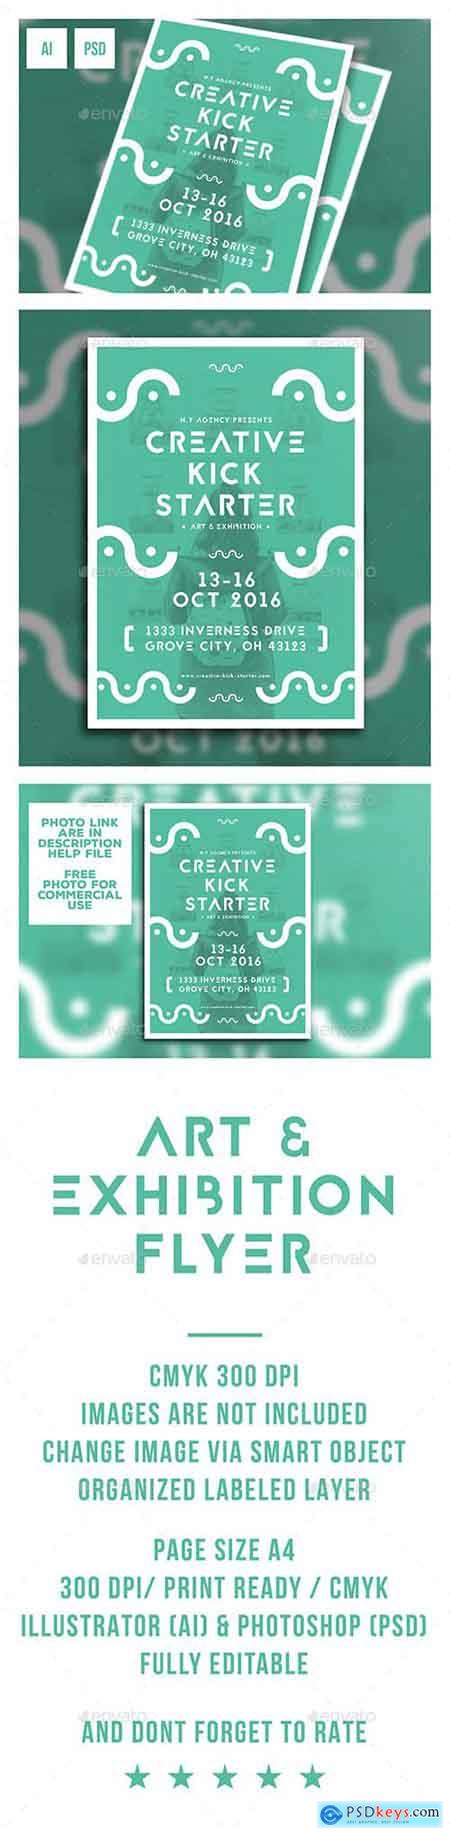 Graphicriver Art & Exhibition Flyer